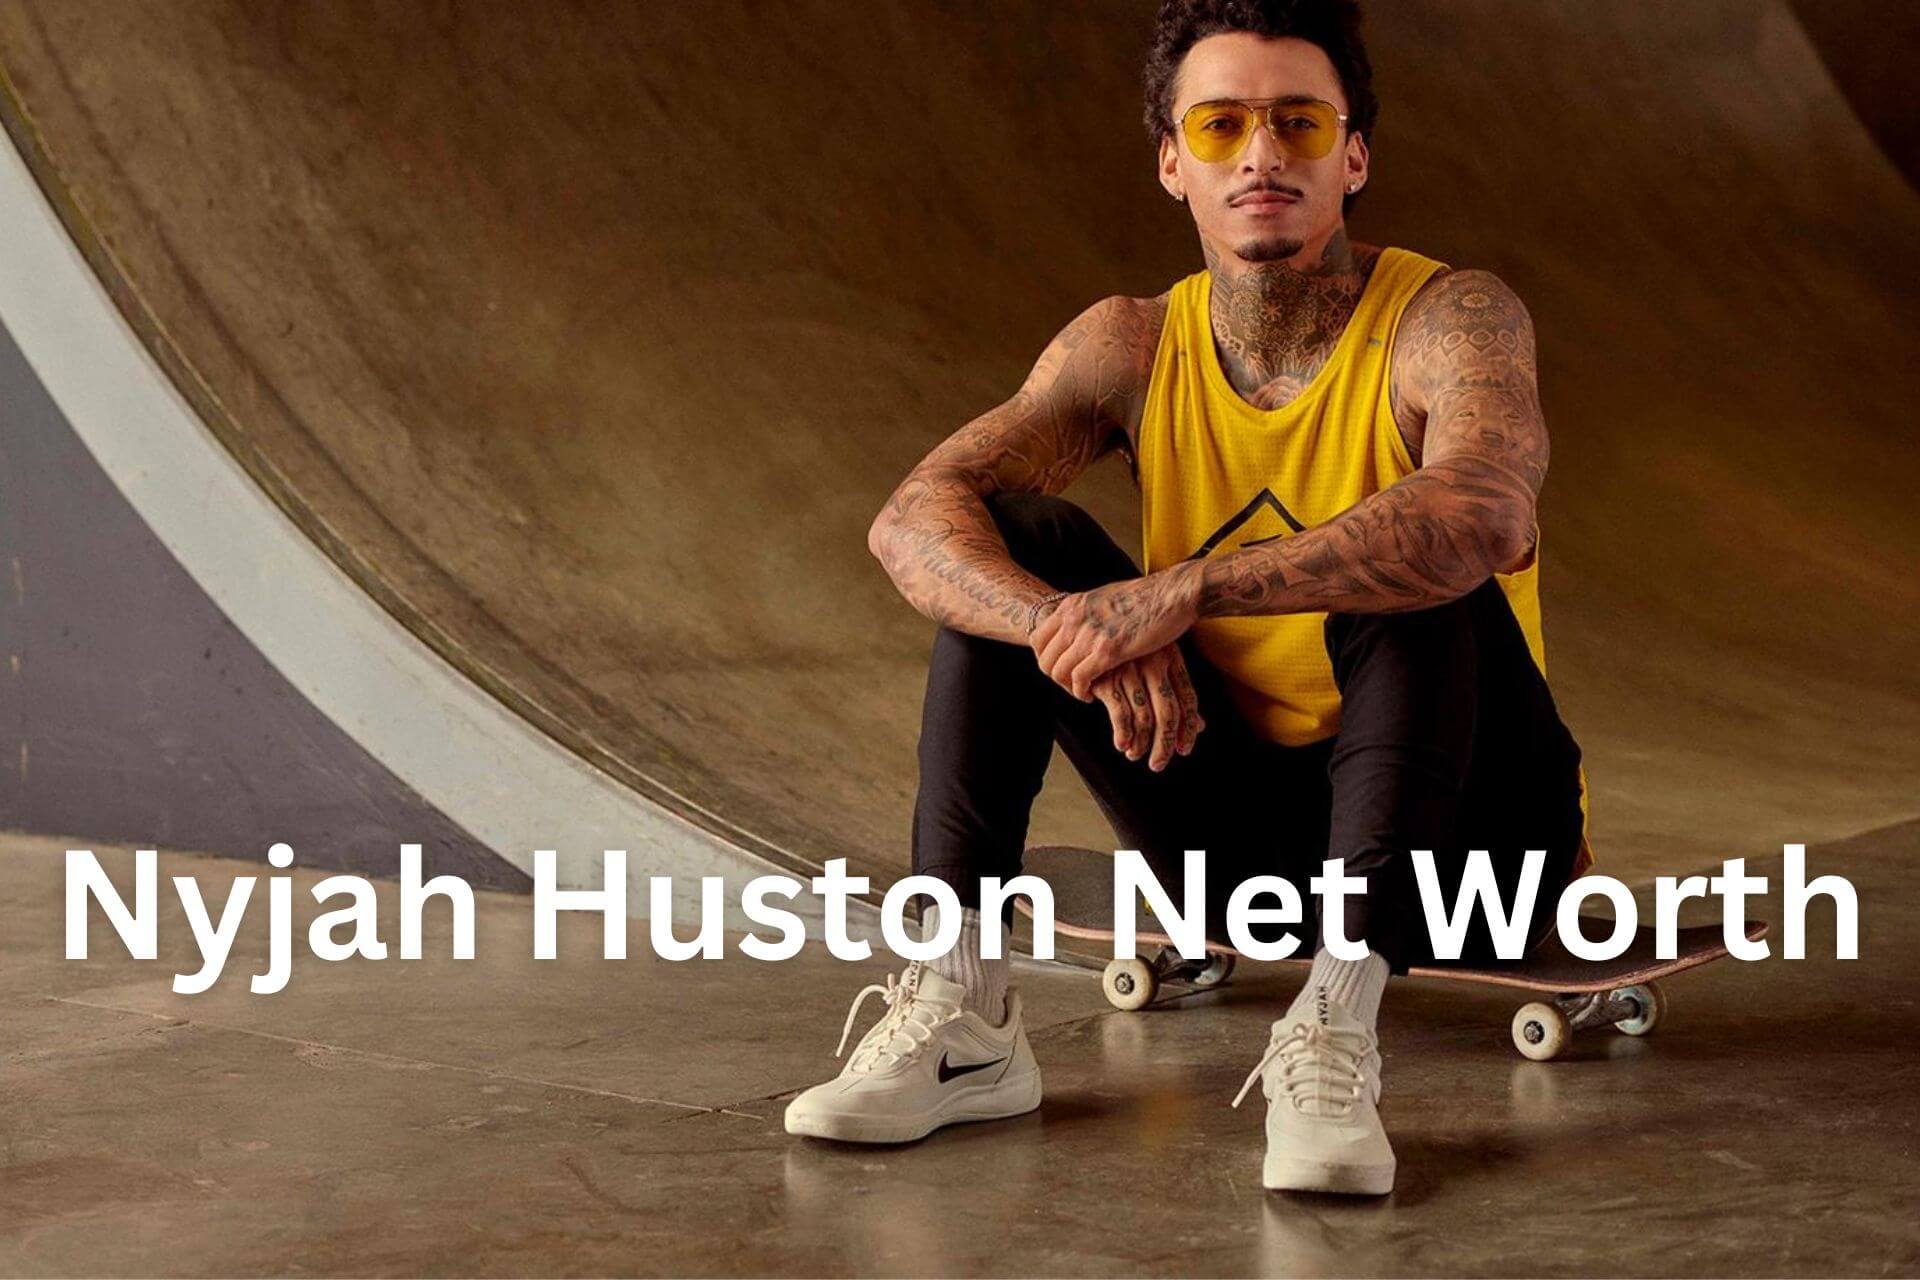 Nyjah Huston Net Worth, Shoes, Tattoos, Skateboard, Age, Girlfriend